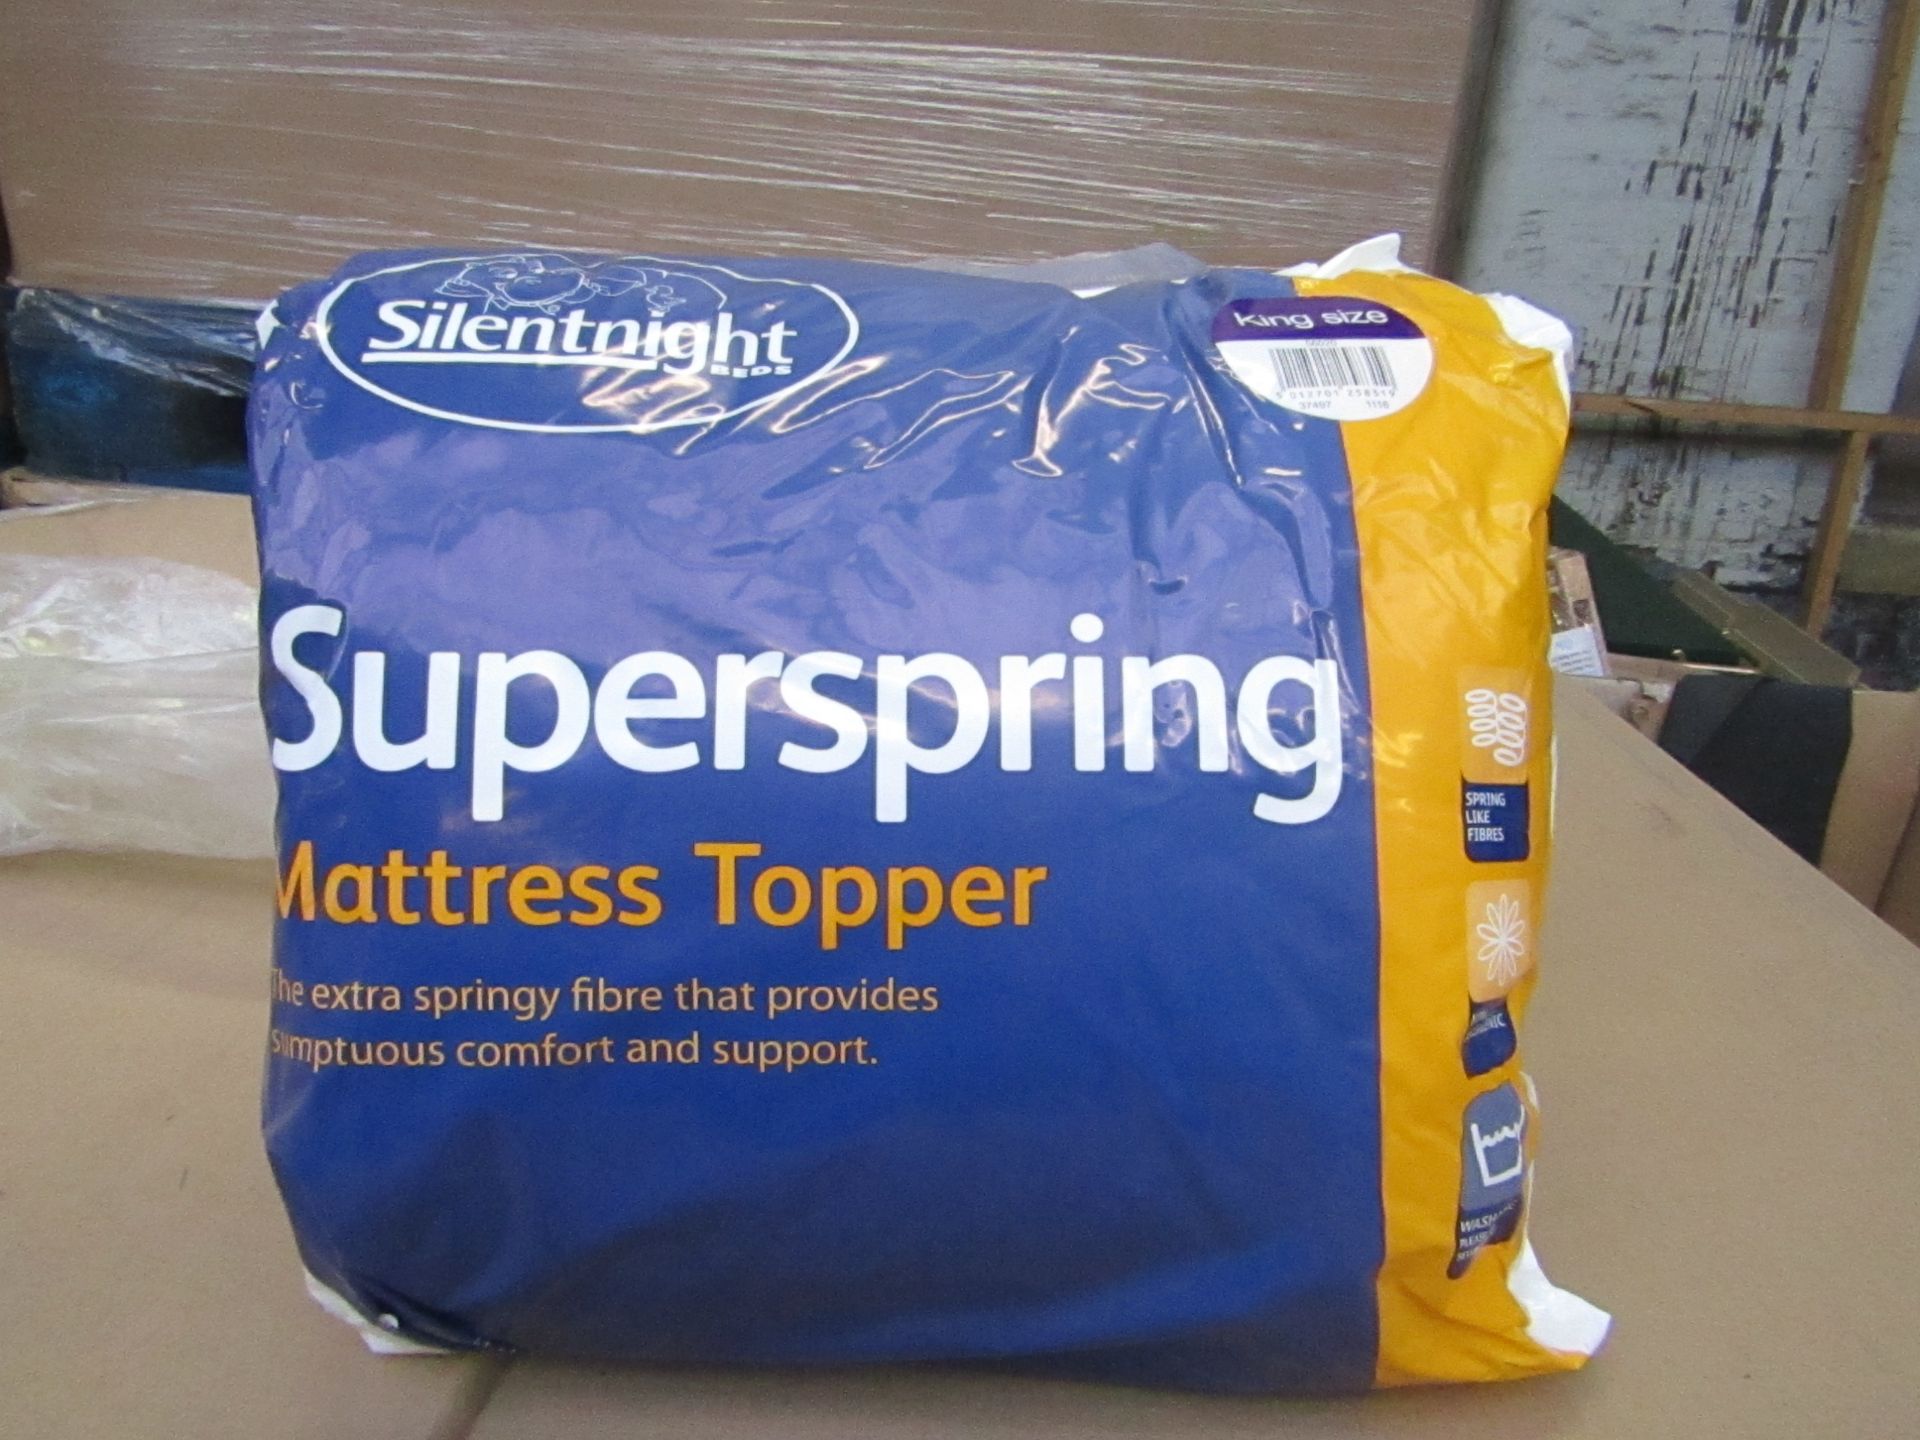 Silentnight Super Spring mattress topper, kingsize, brand new and packaged. RRP £29.99